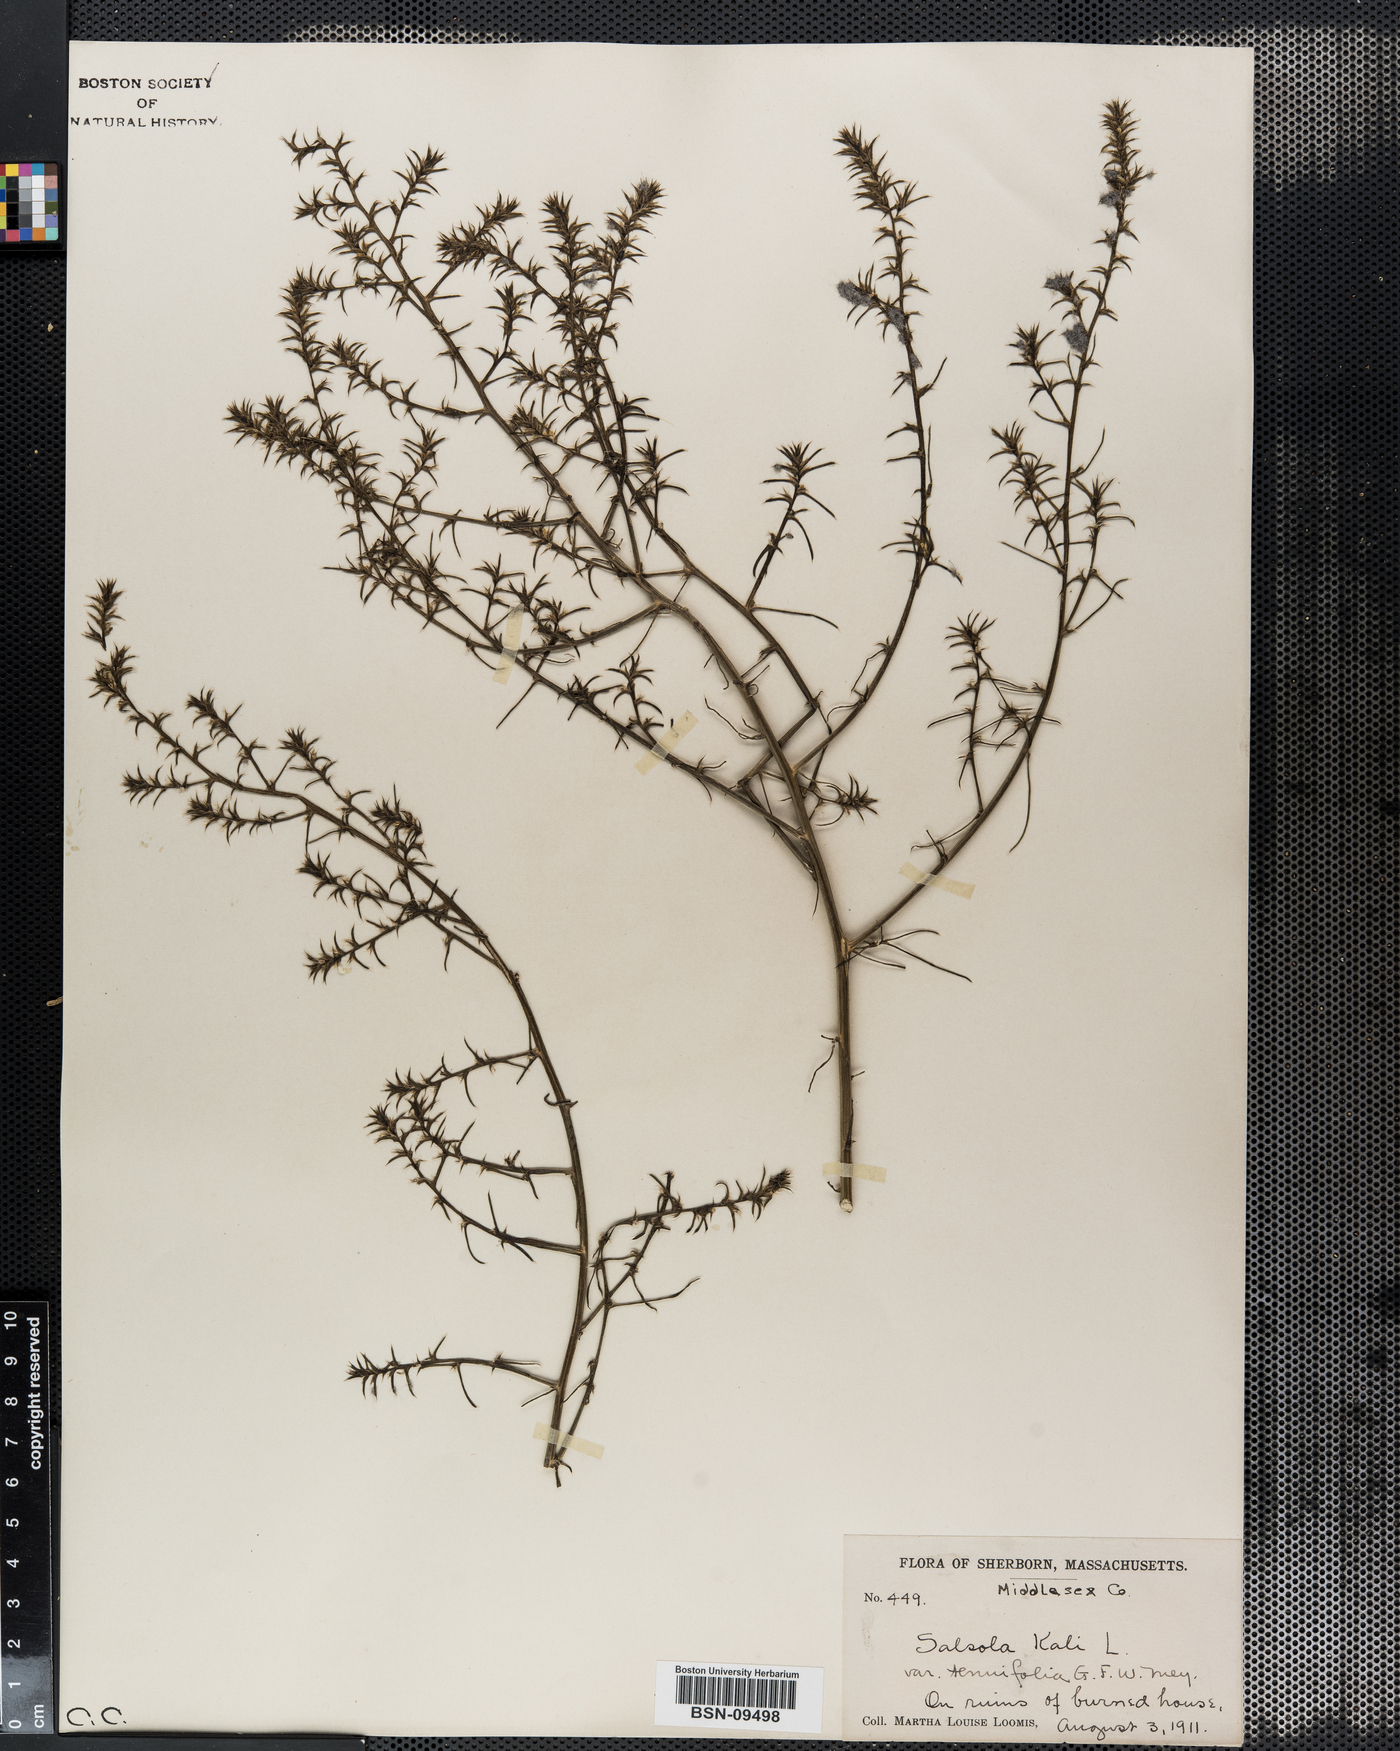 Salsola kali var. tenuifolia image